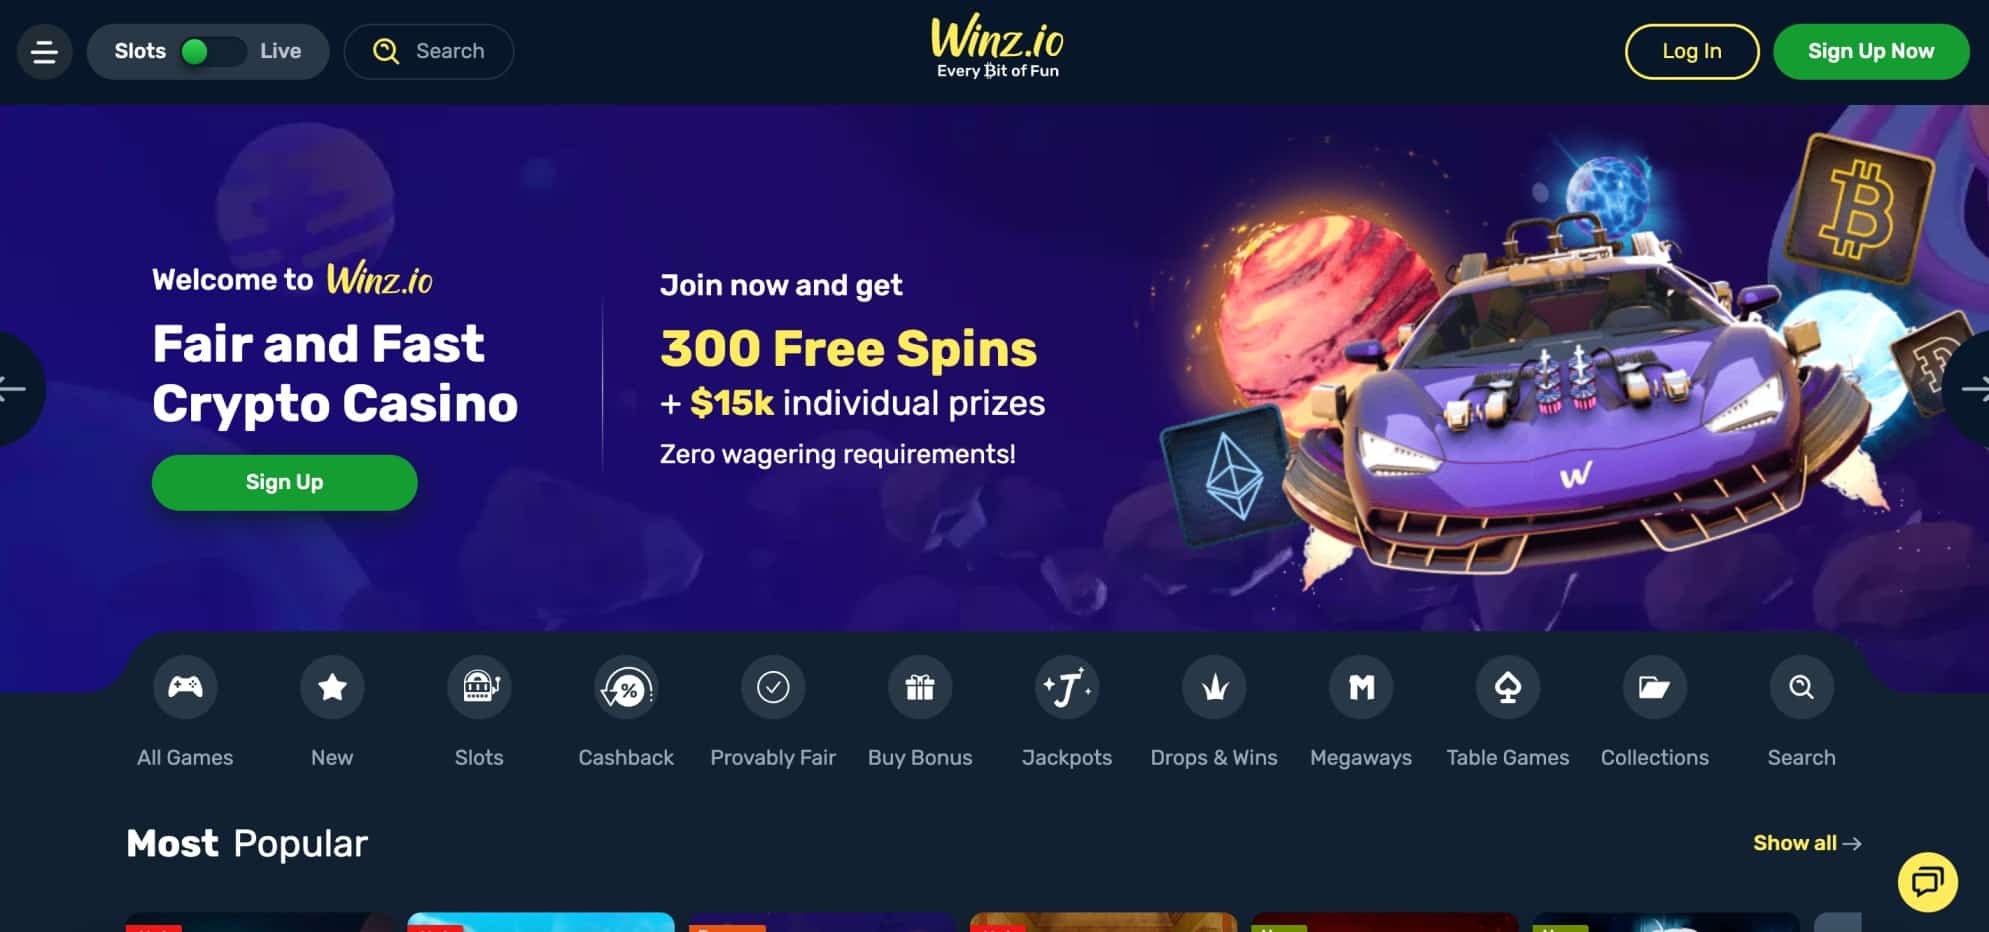 Winz.io review